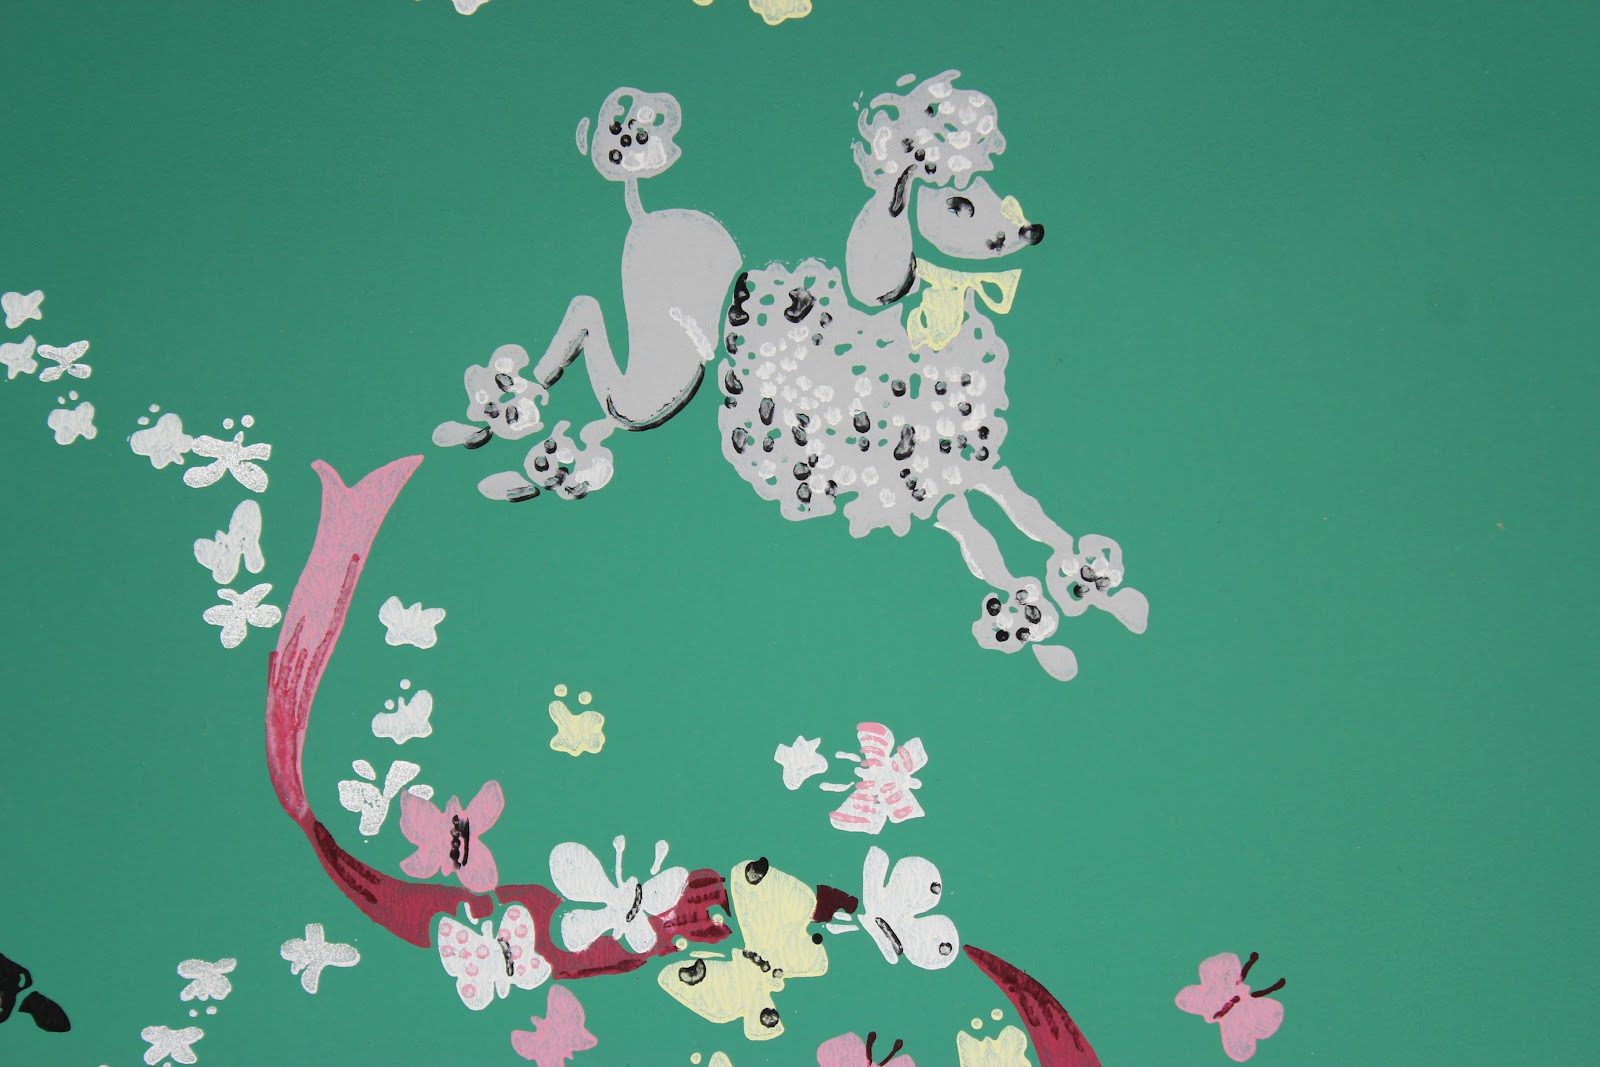 Rosie S Vintage Wallpaper With Poodles